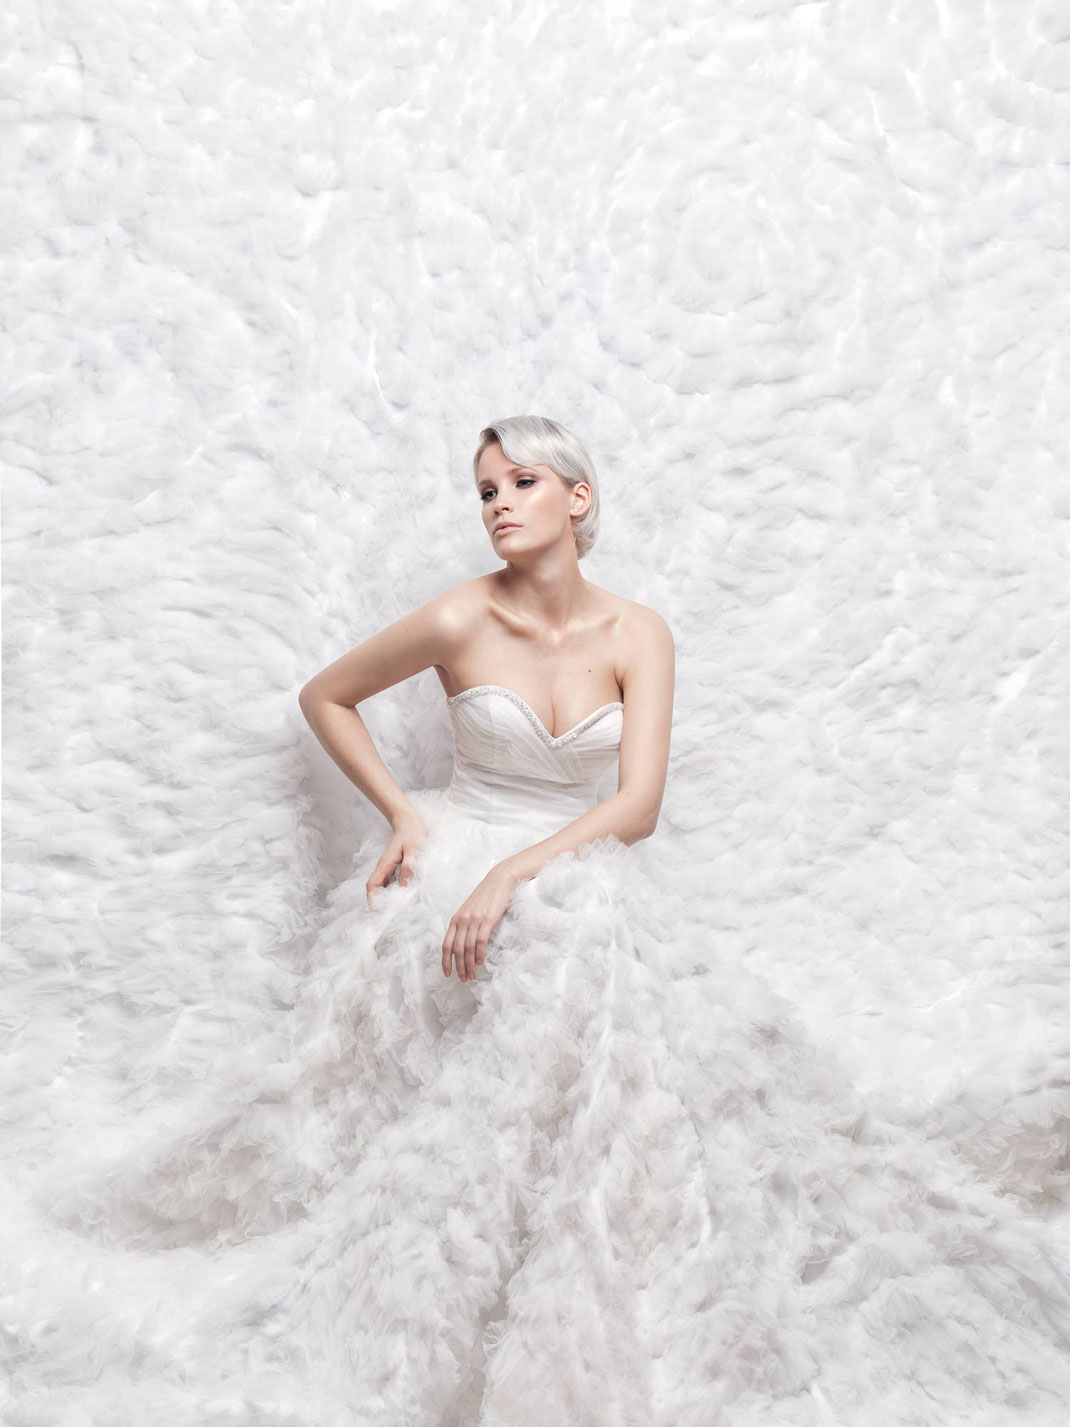 White - Jane - Markus Hertzsch - Model - Girl - Portrait - Bride - Dress - White - Marriage - Pose - Elegant - Fashion